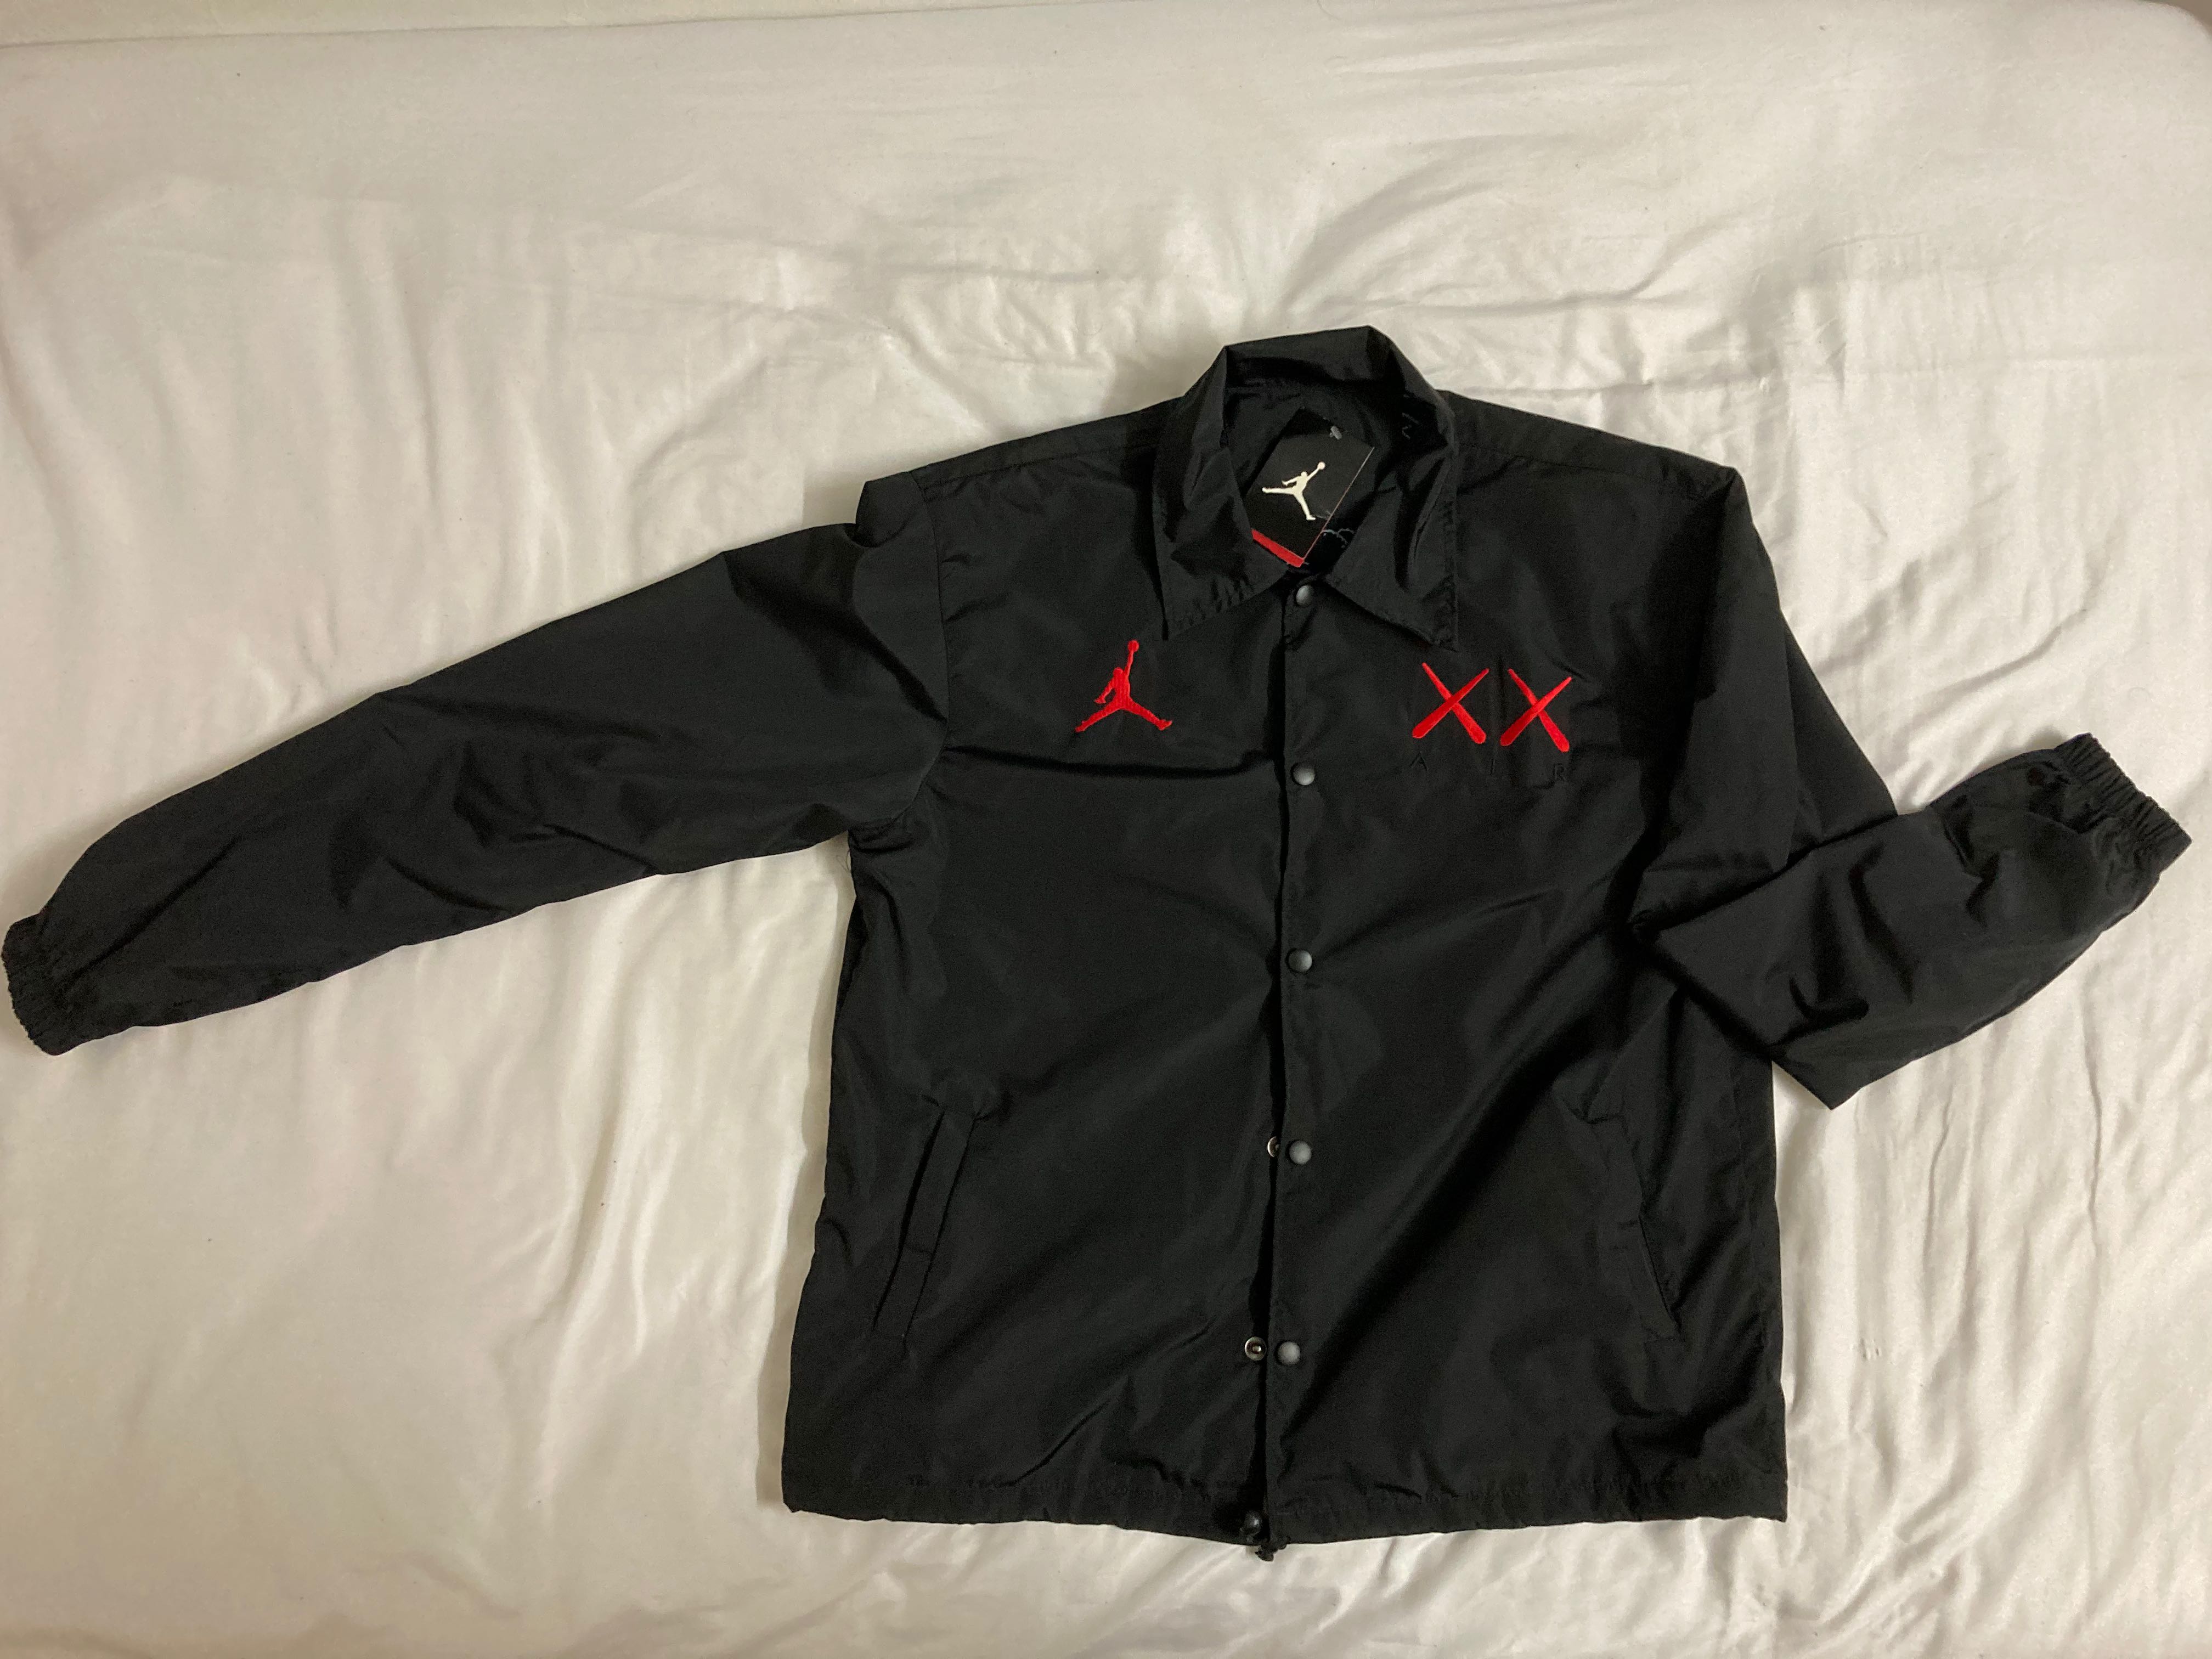 Jordan x Kaws x Coach windbreaker jacket (Bootleg/Not Ori